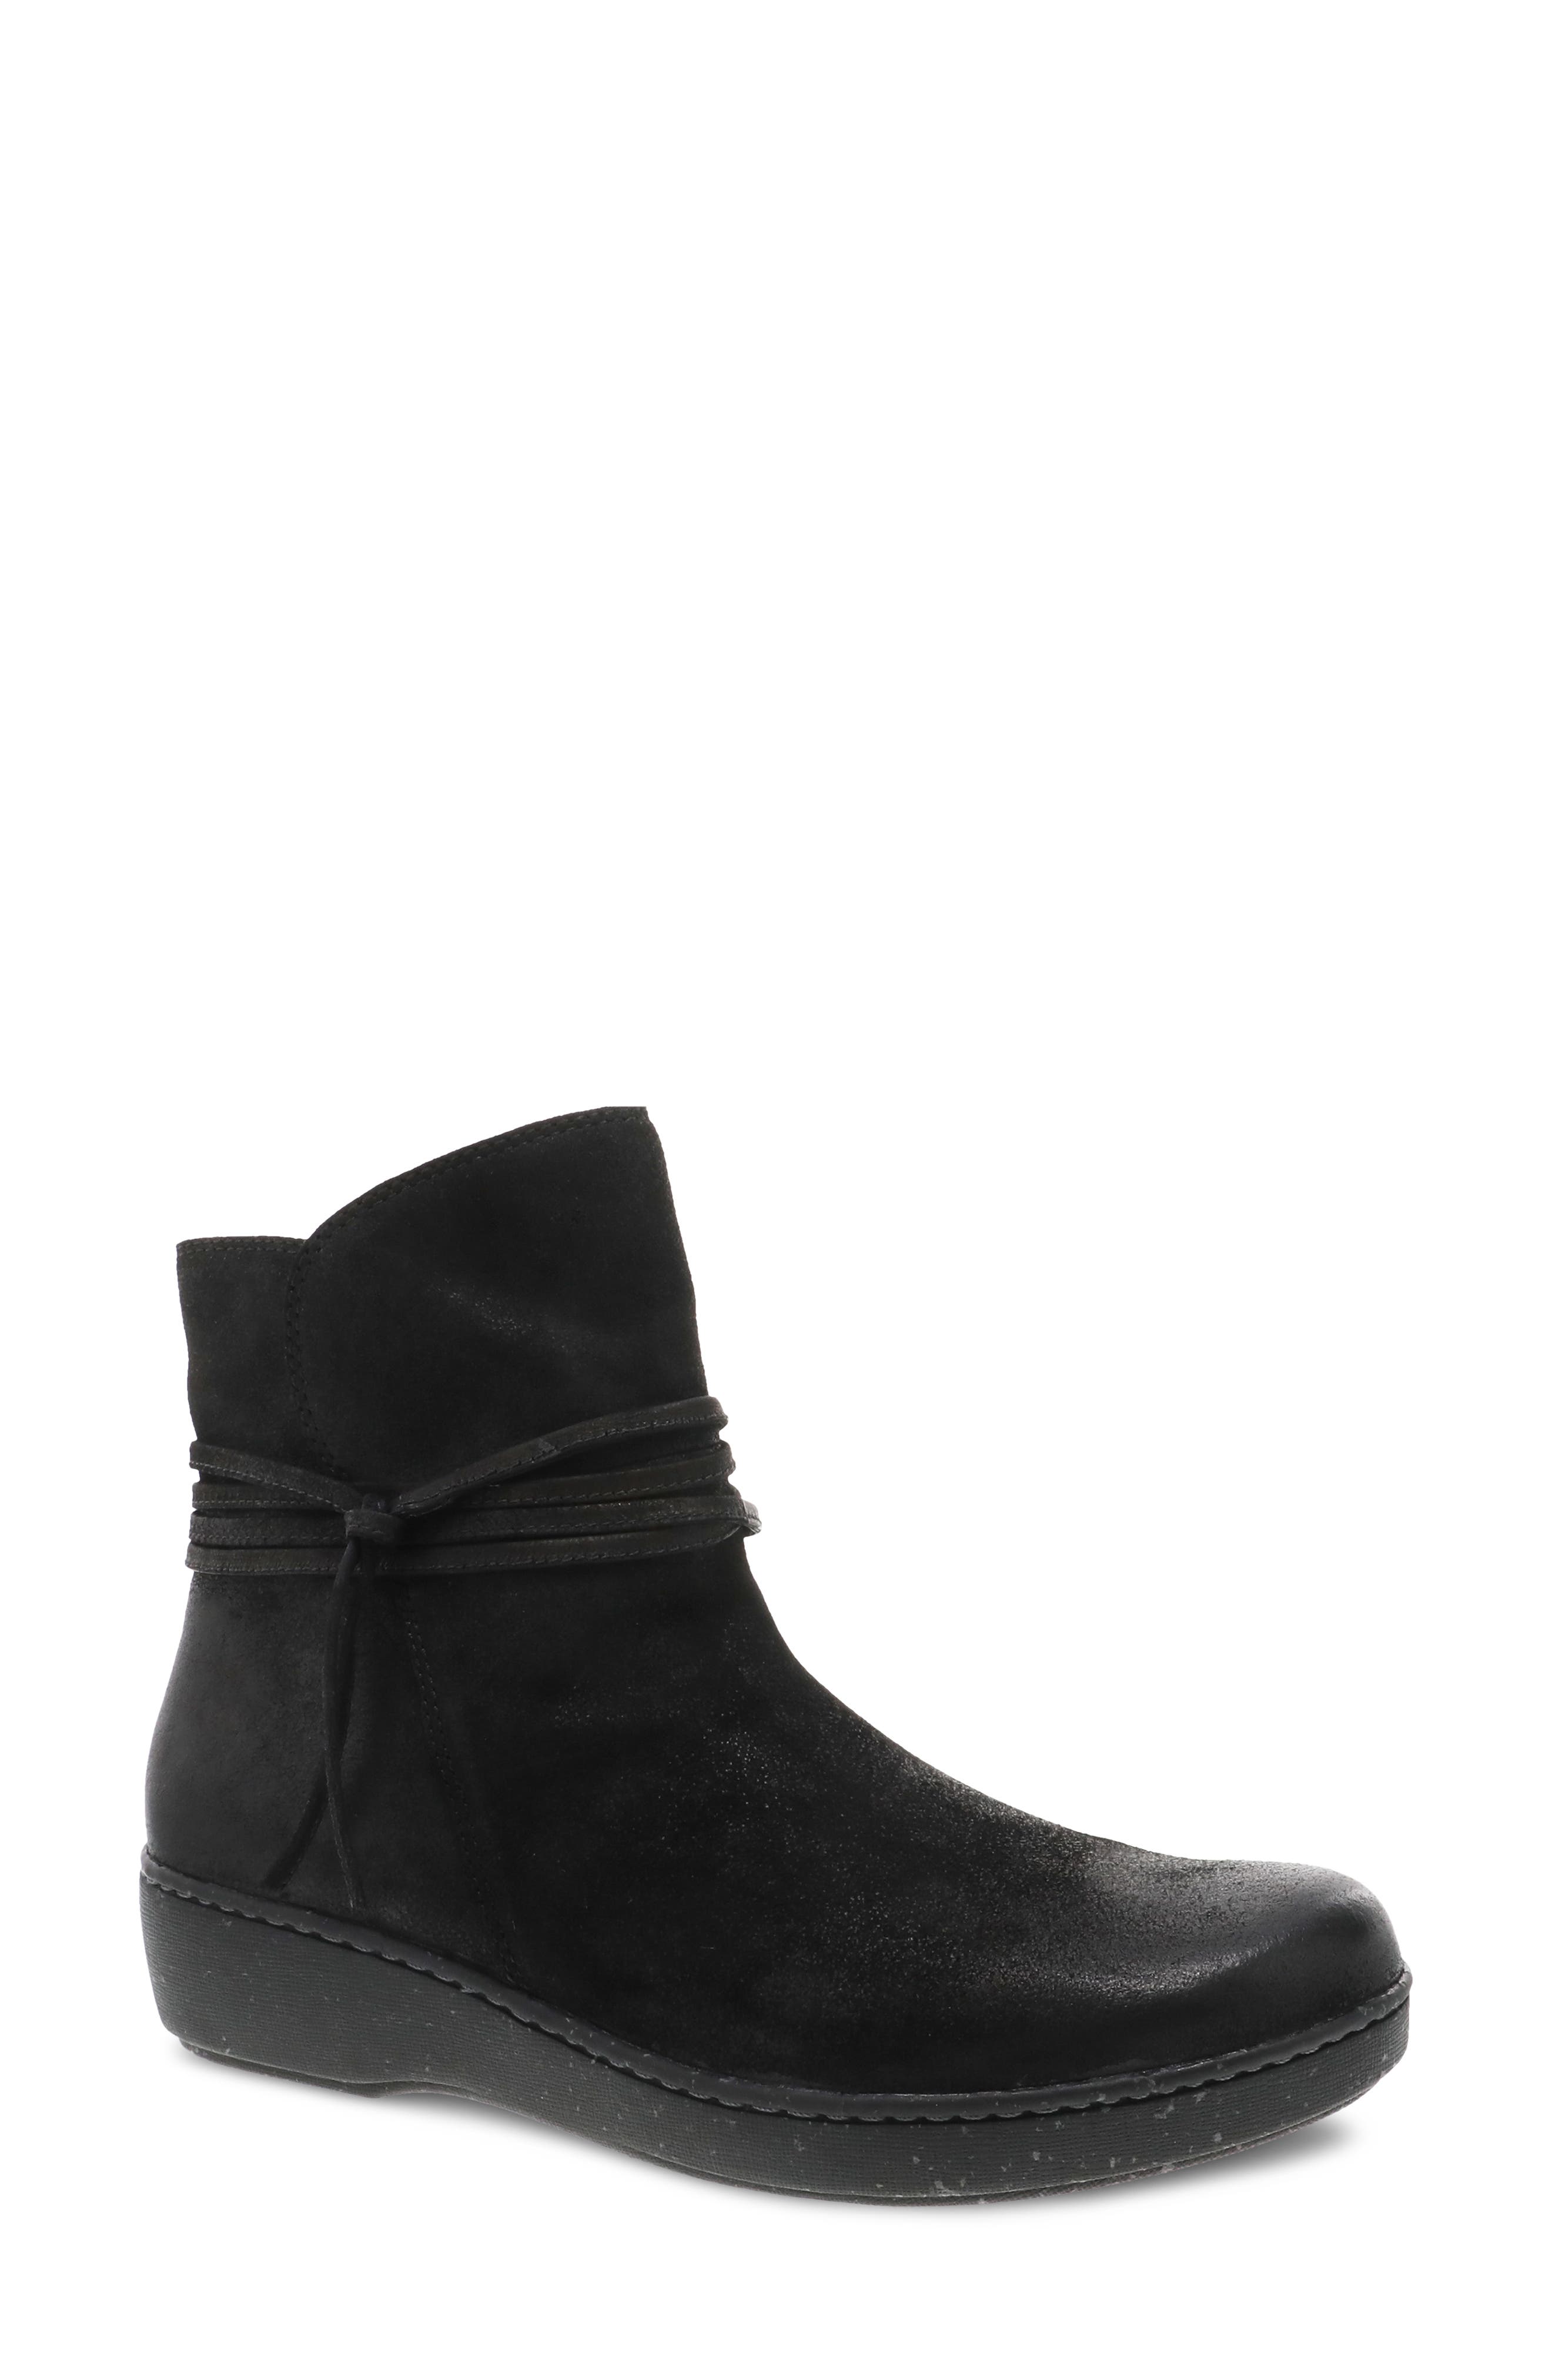 dansko black boots